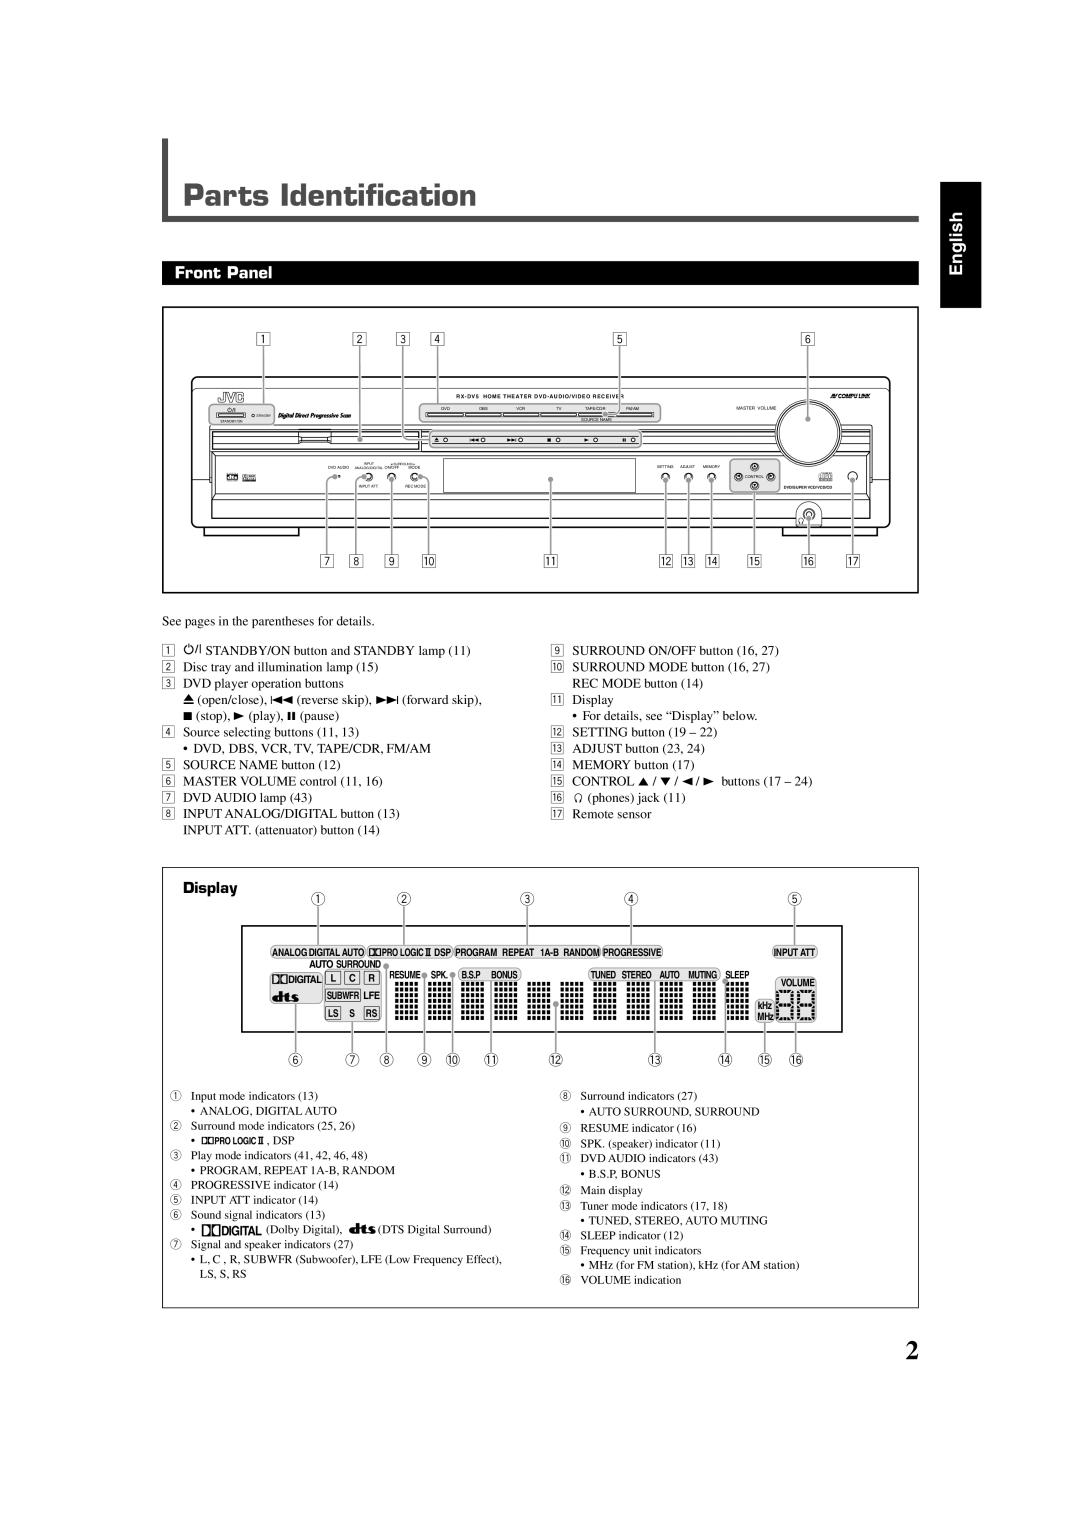 JVC RX-DV5SL manual Parts Identification, Front Panel, English, Display 